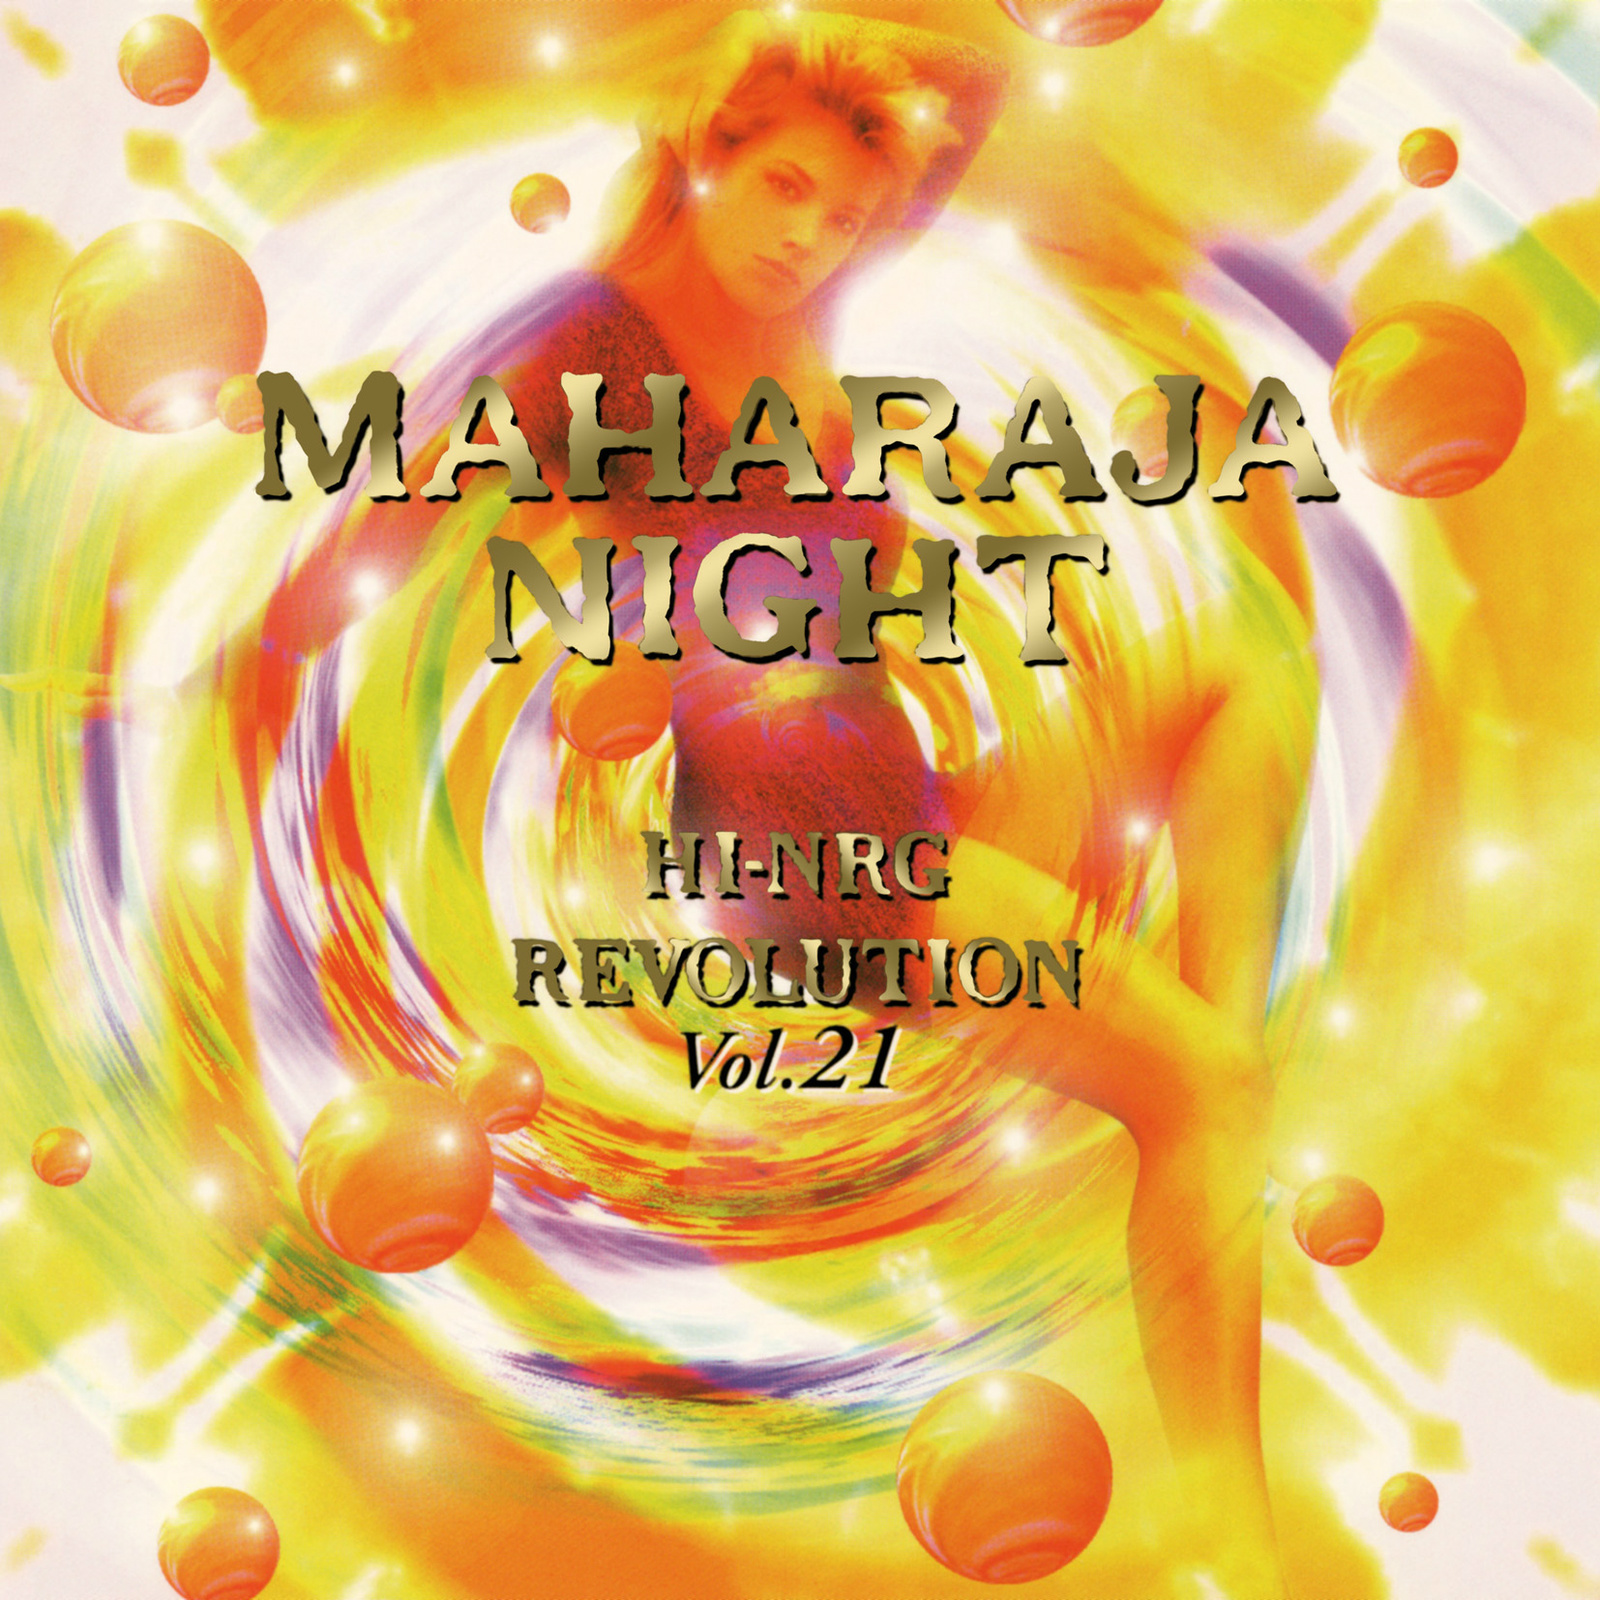 MAHARAJA NIGHT HI-NRG REVOLUTION VOL.21